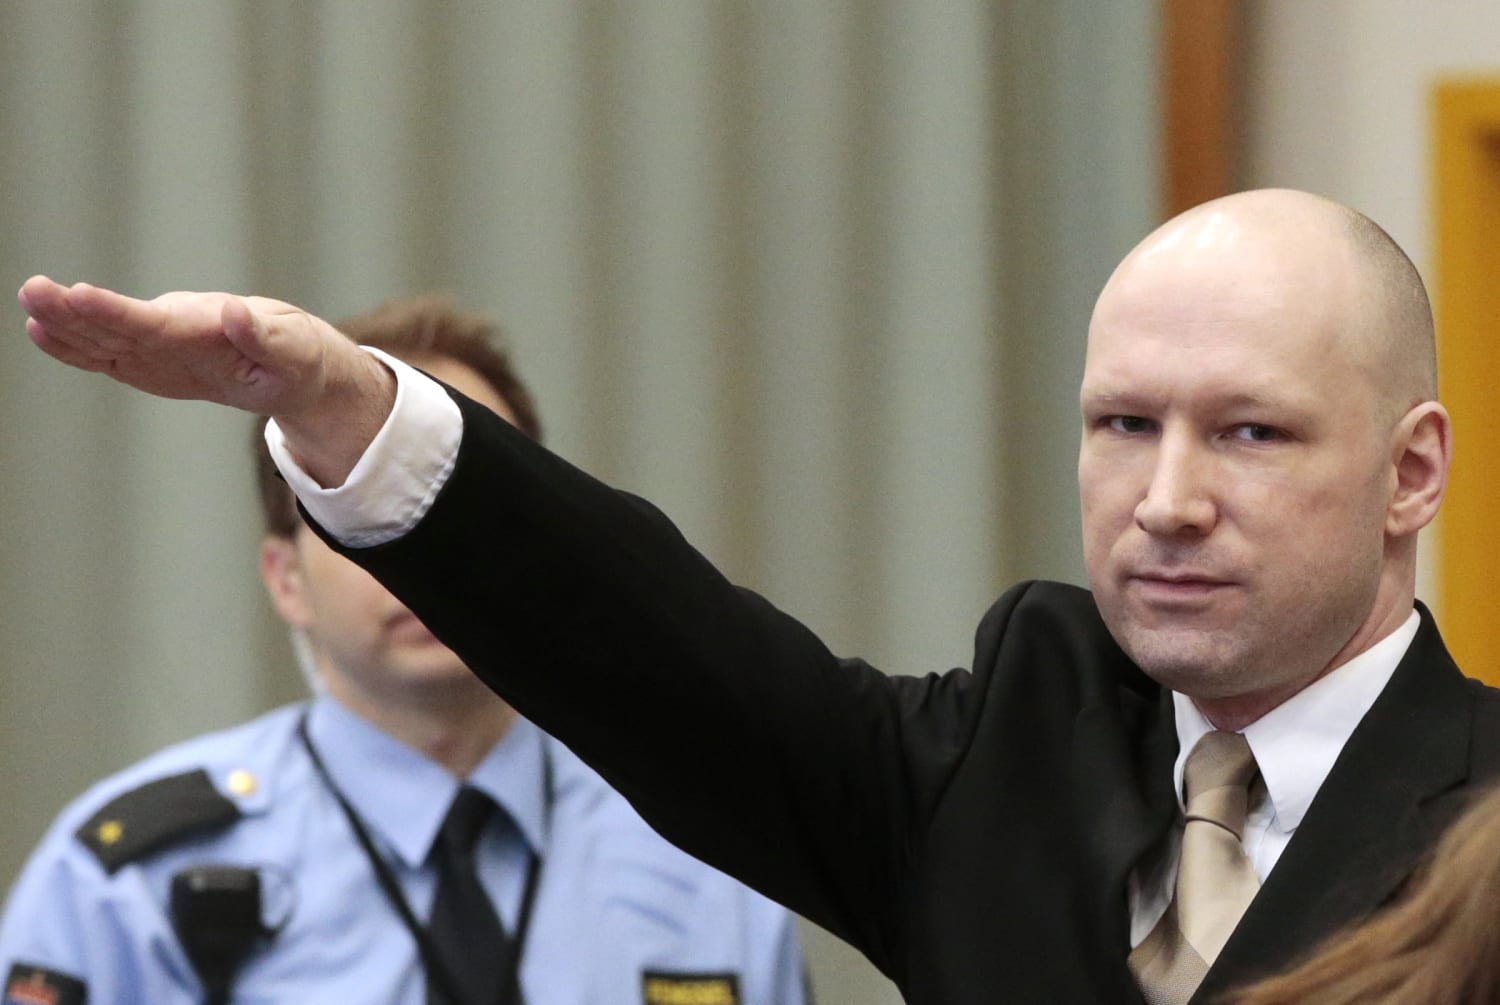 160315-world-breivik-nazi-salute-court-5a-jpg-0557.jpg